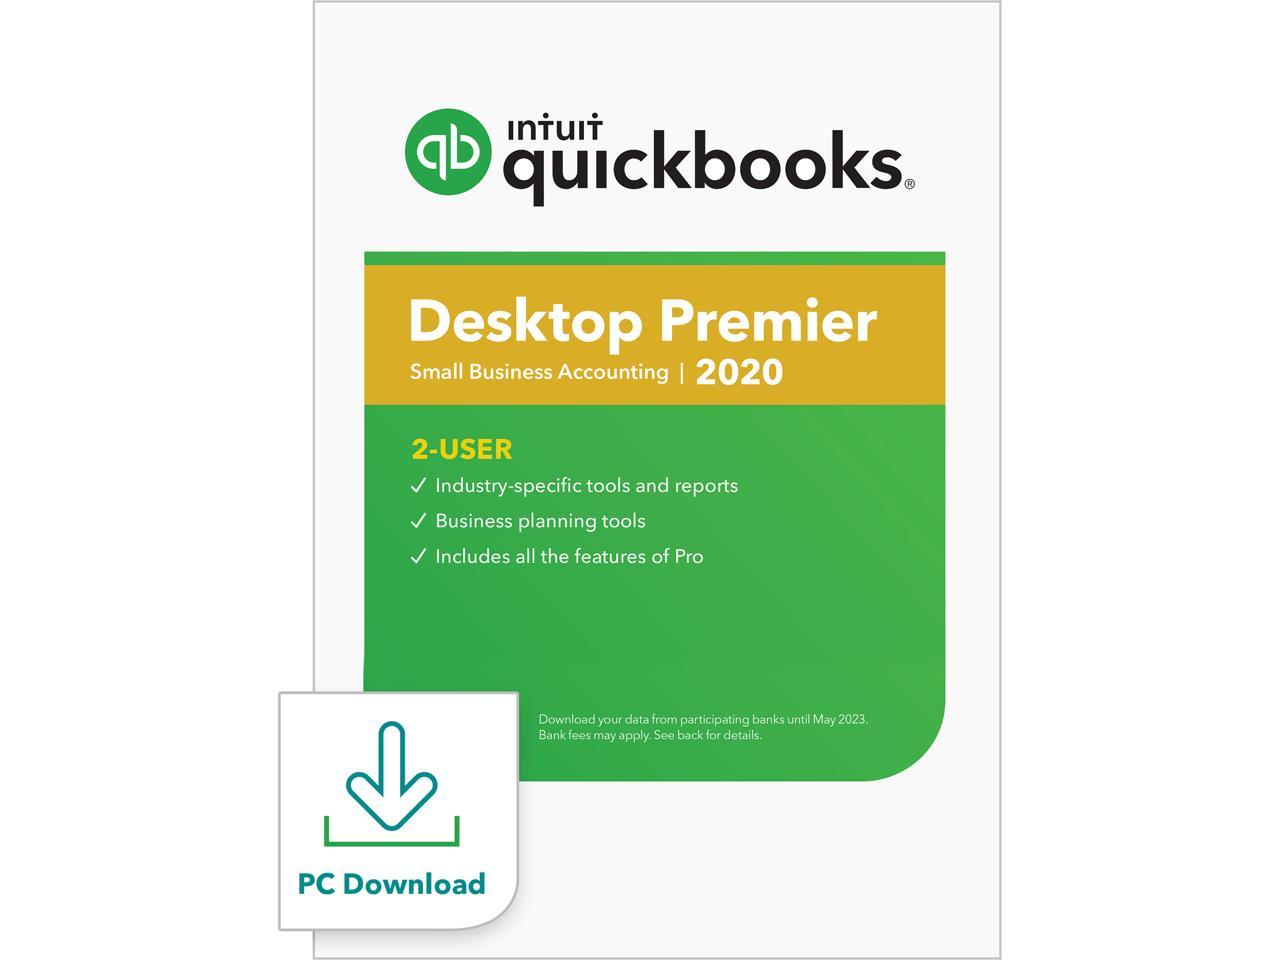 quickbooks pro for mac 2012 download